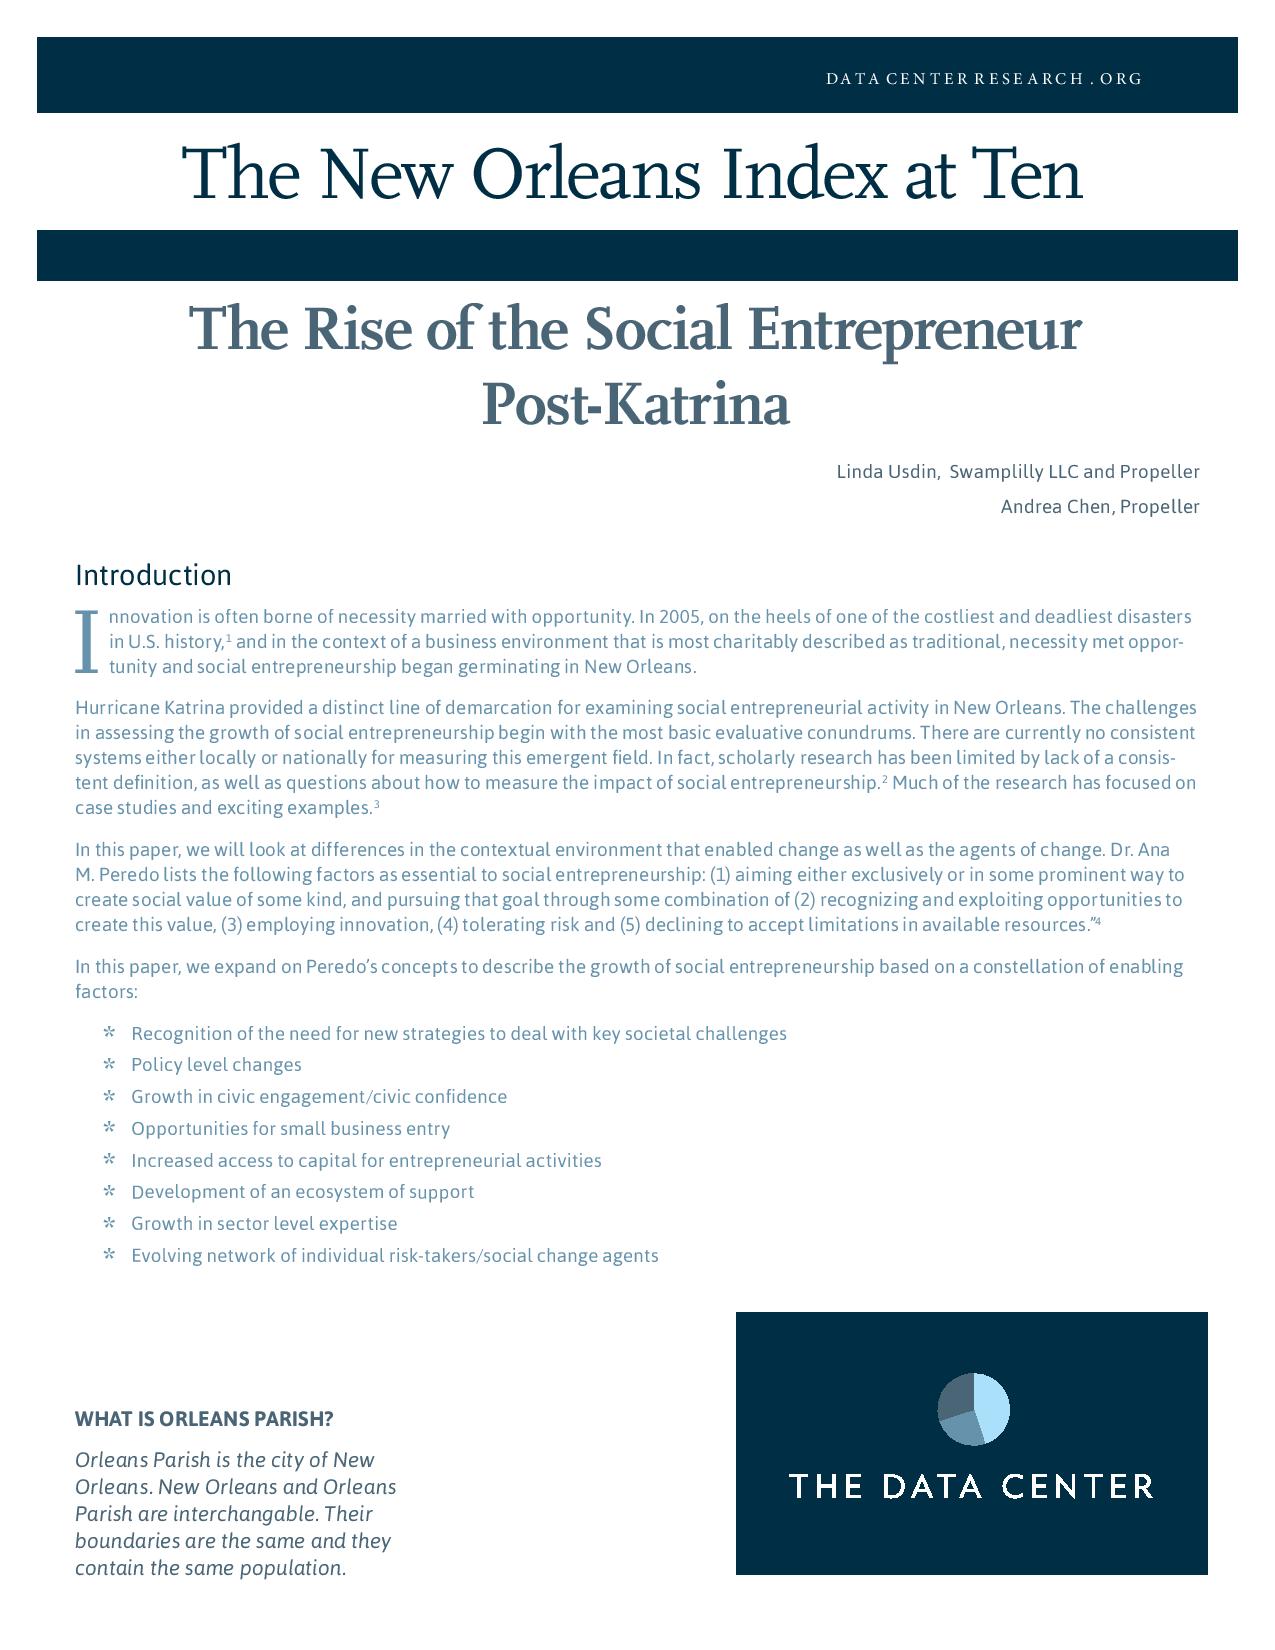 The Rise of the Social Entrepreneur Post-Katrina